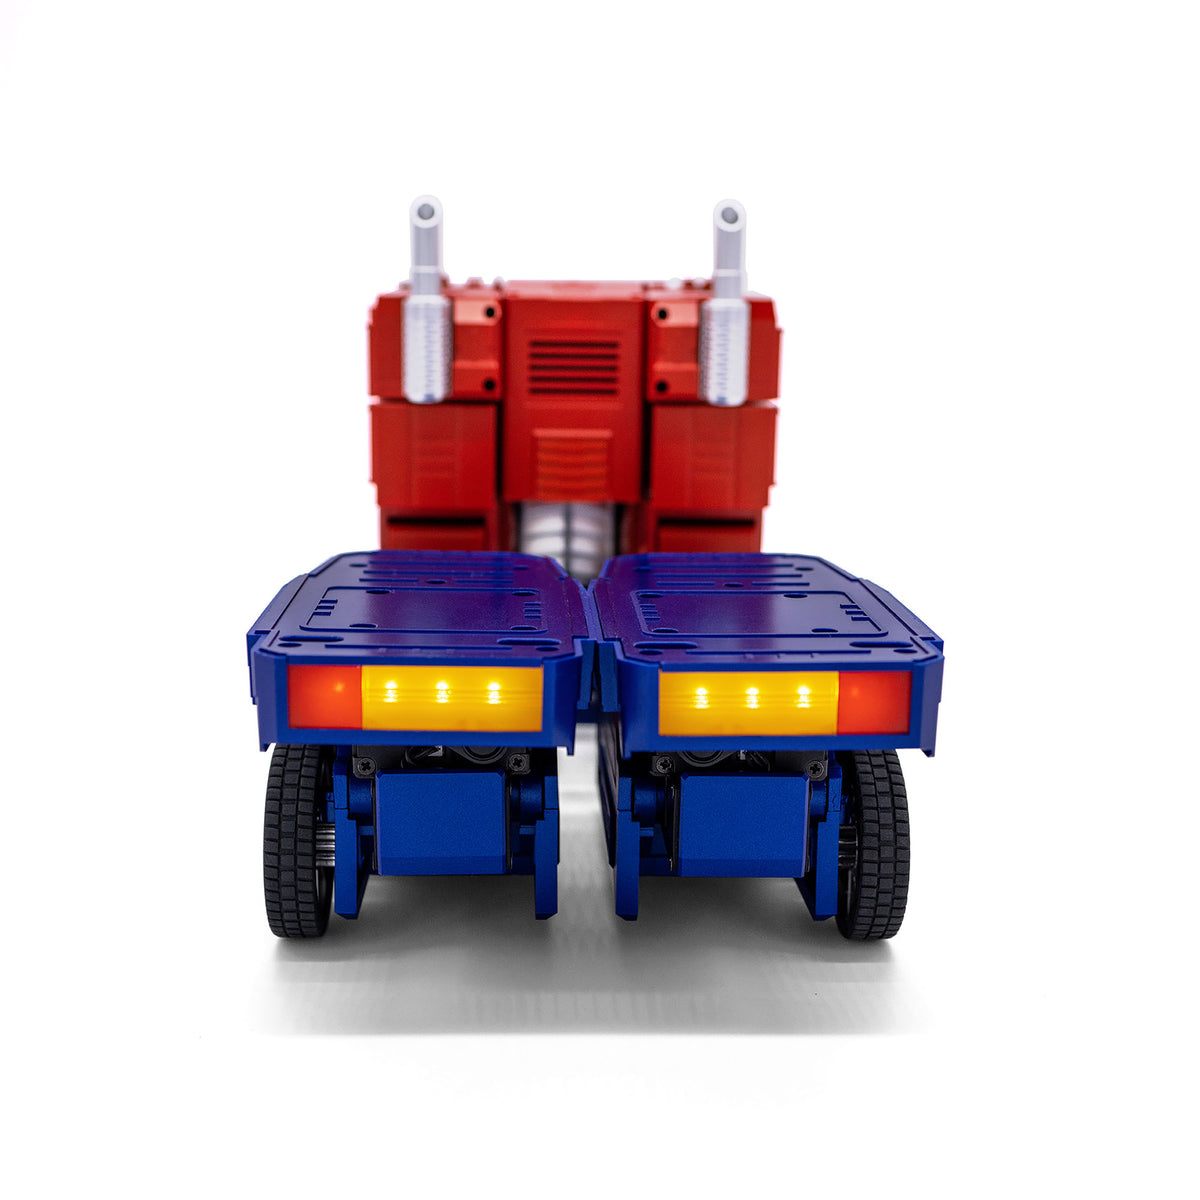 Transformers Optimus Prime Auto-Converting Robot (Elite) by